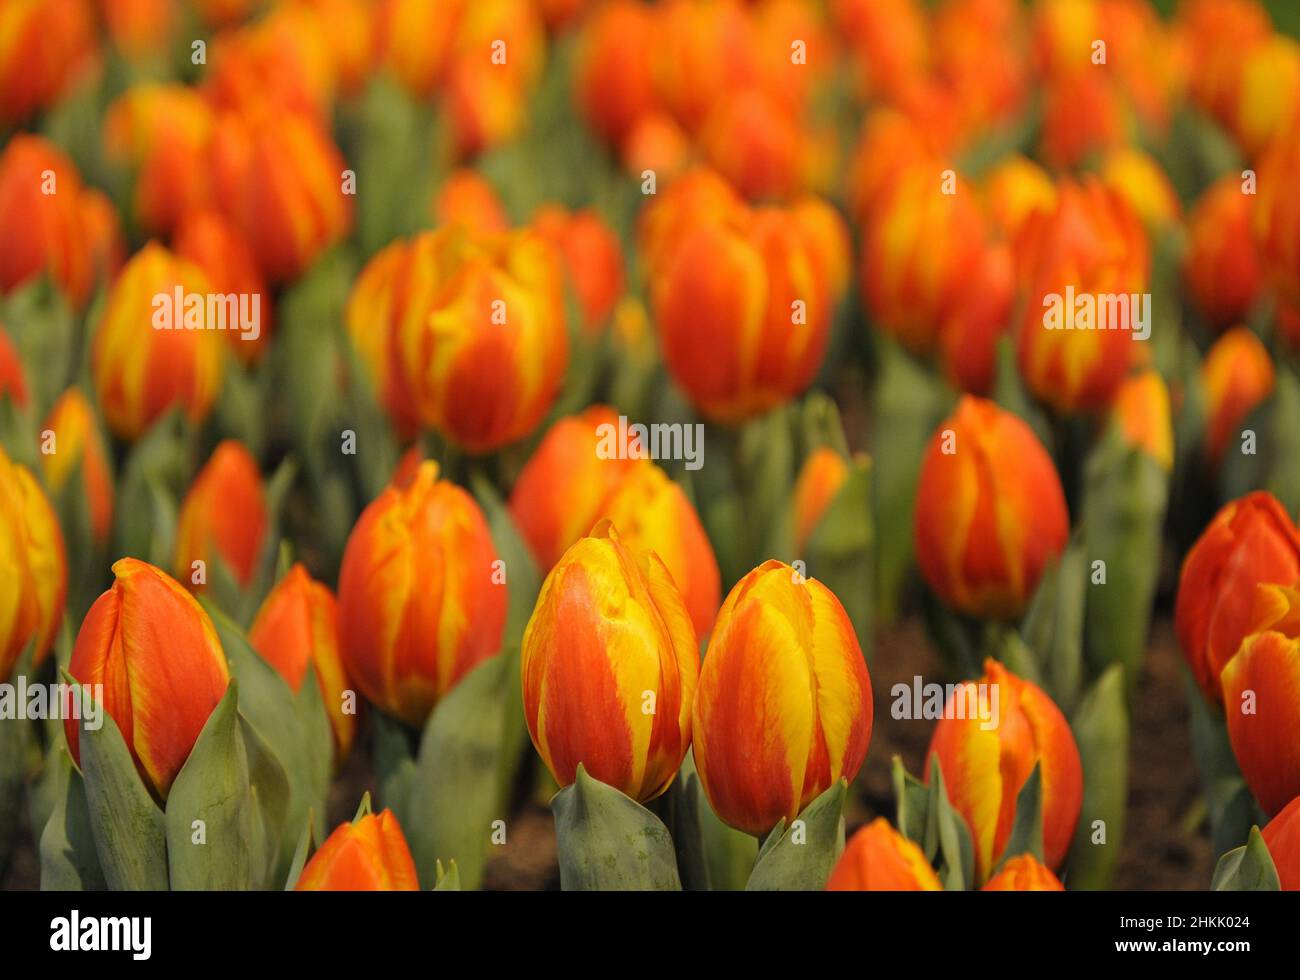 common garden tulip (Tulipa spec.), bicolor tulips in a tulip field Stock Photo